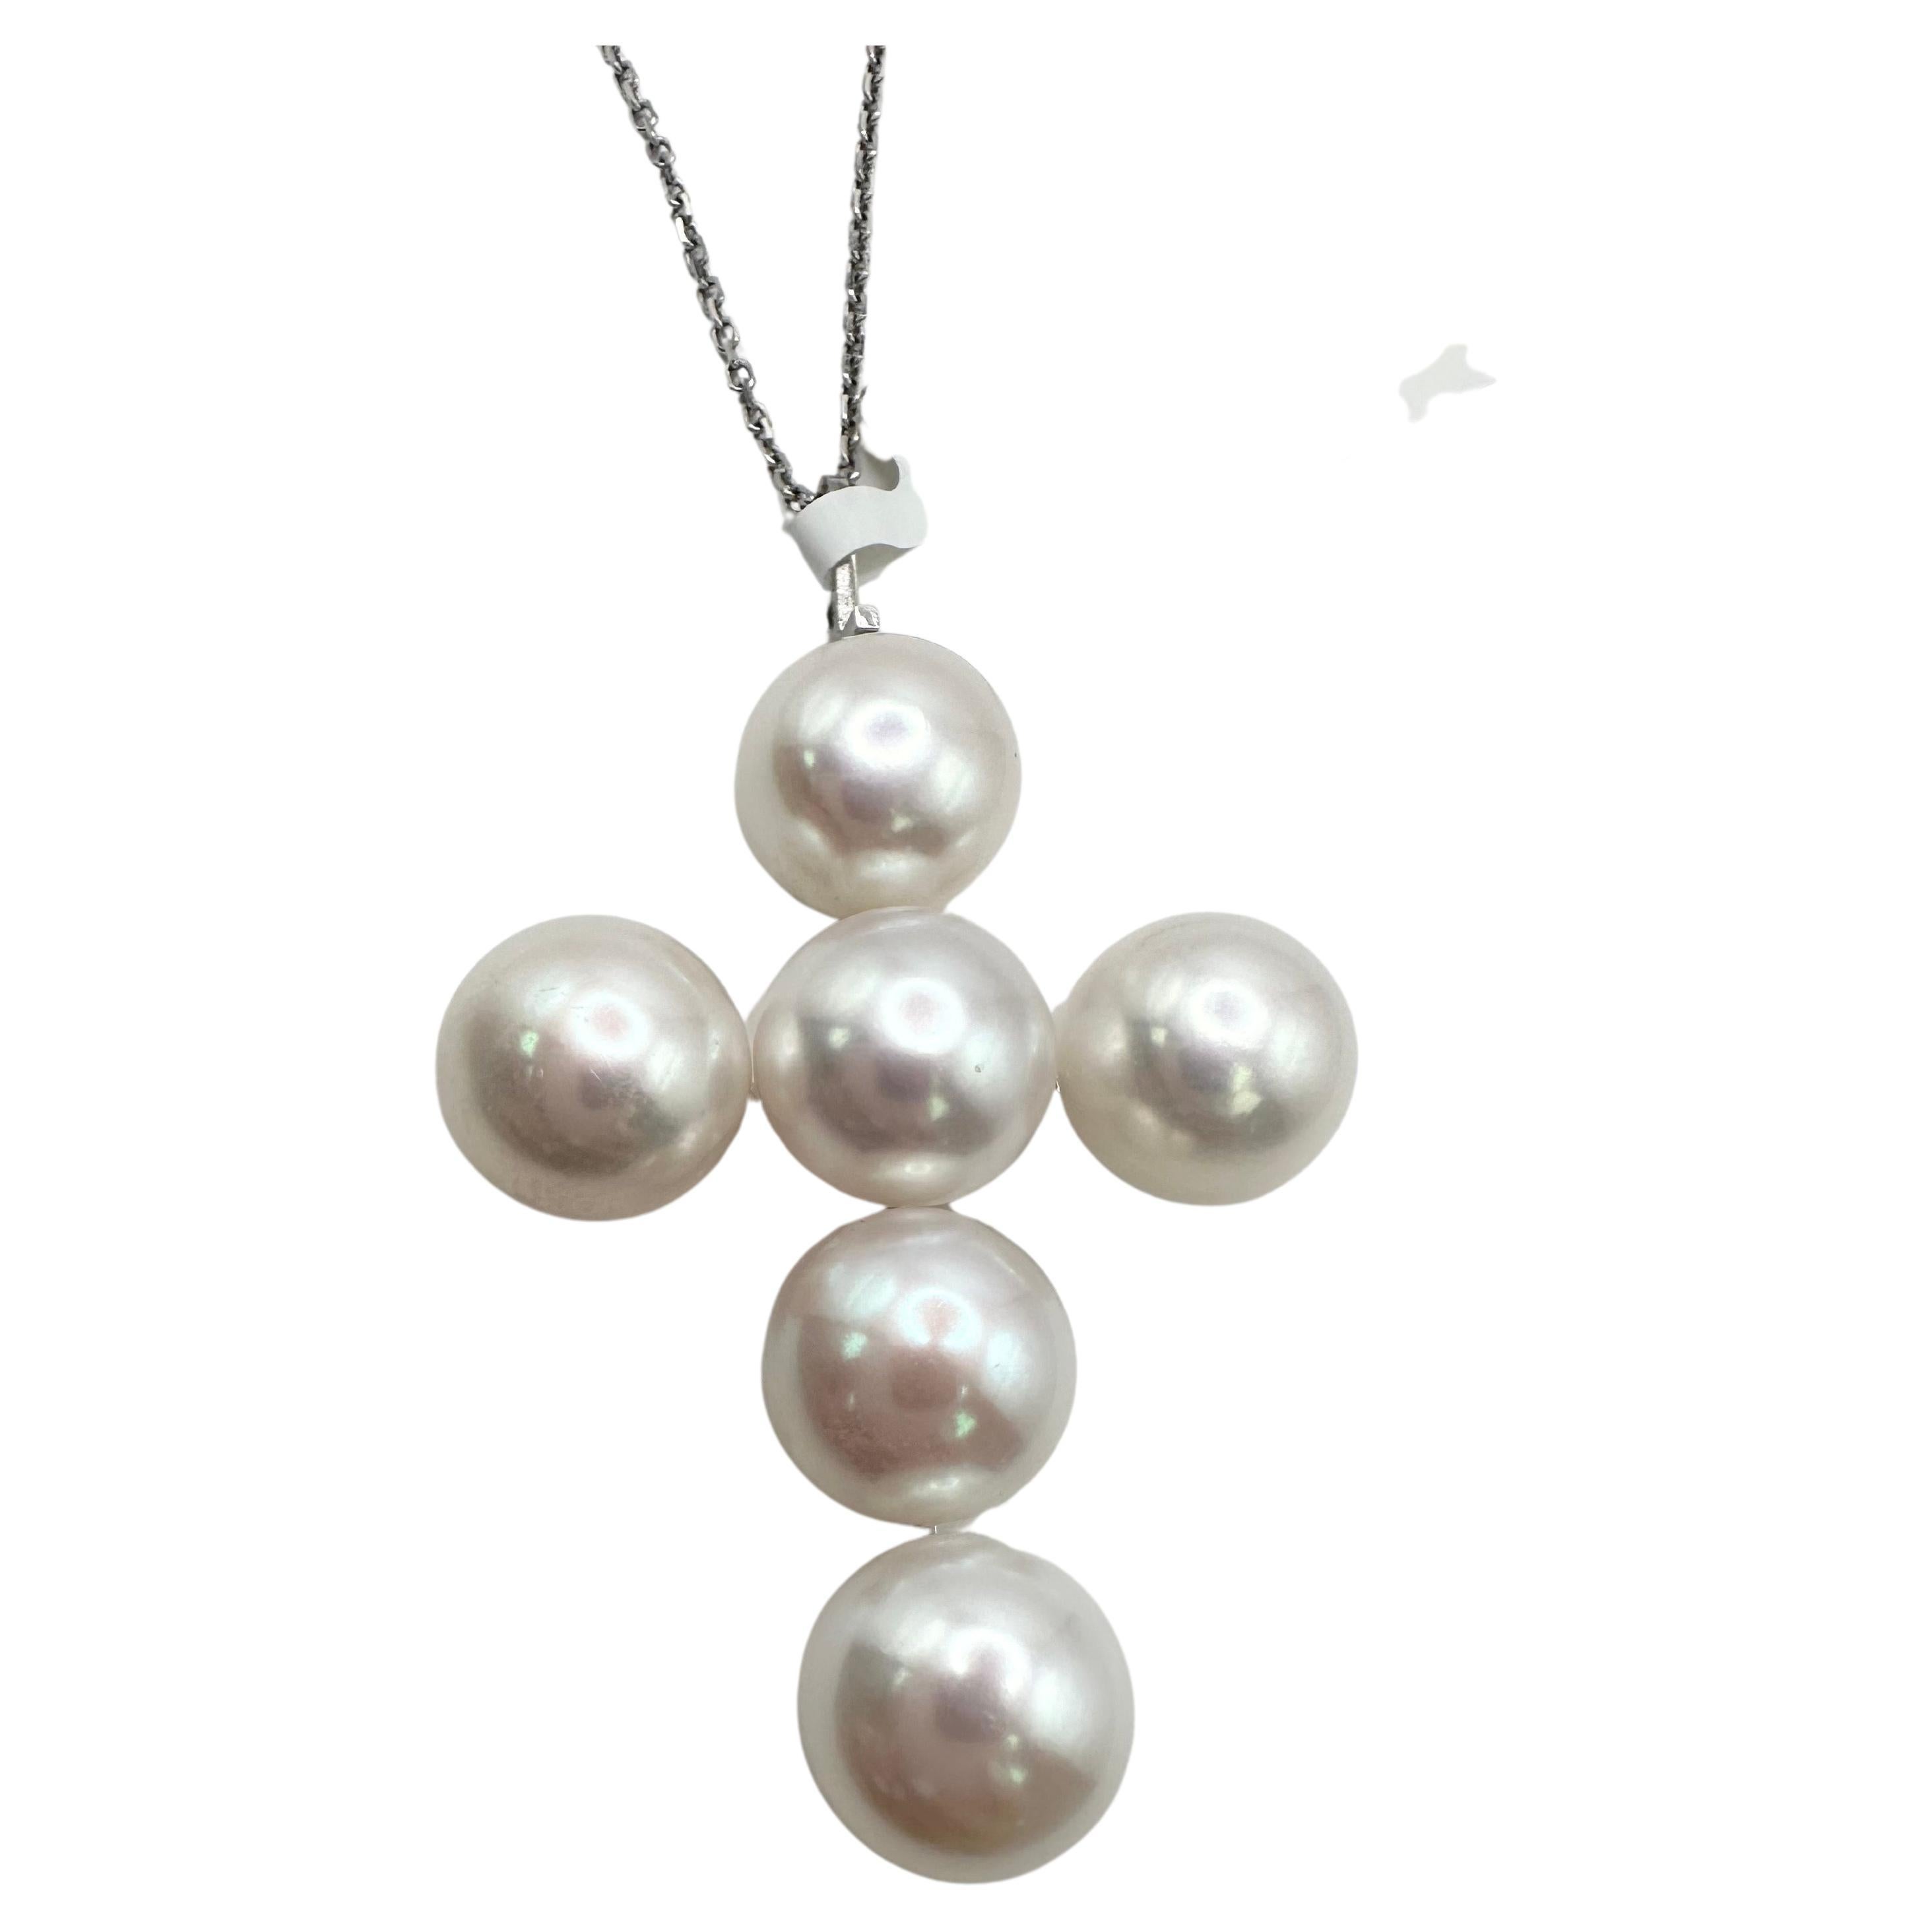 Seltener Perlen-Anhänger Halskette Kreuz 14KT Gold 15mm Perlen